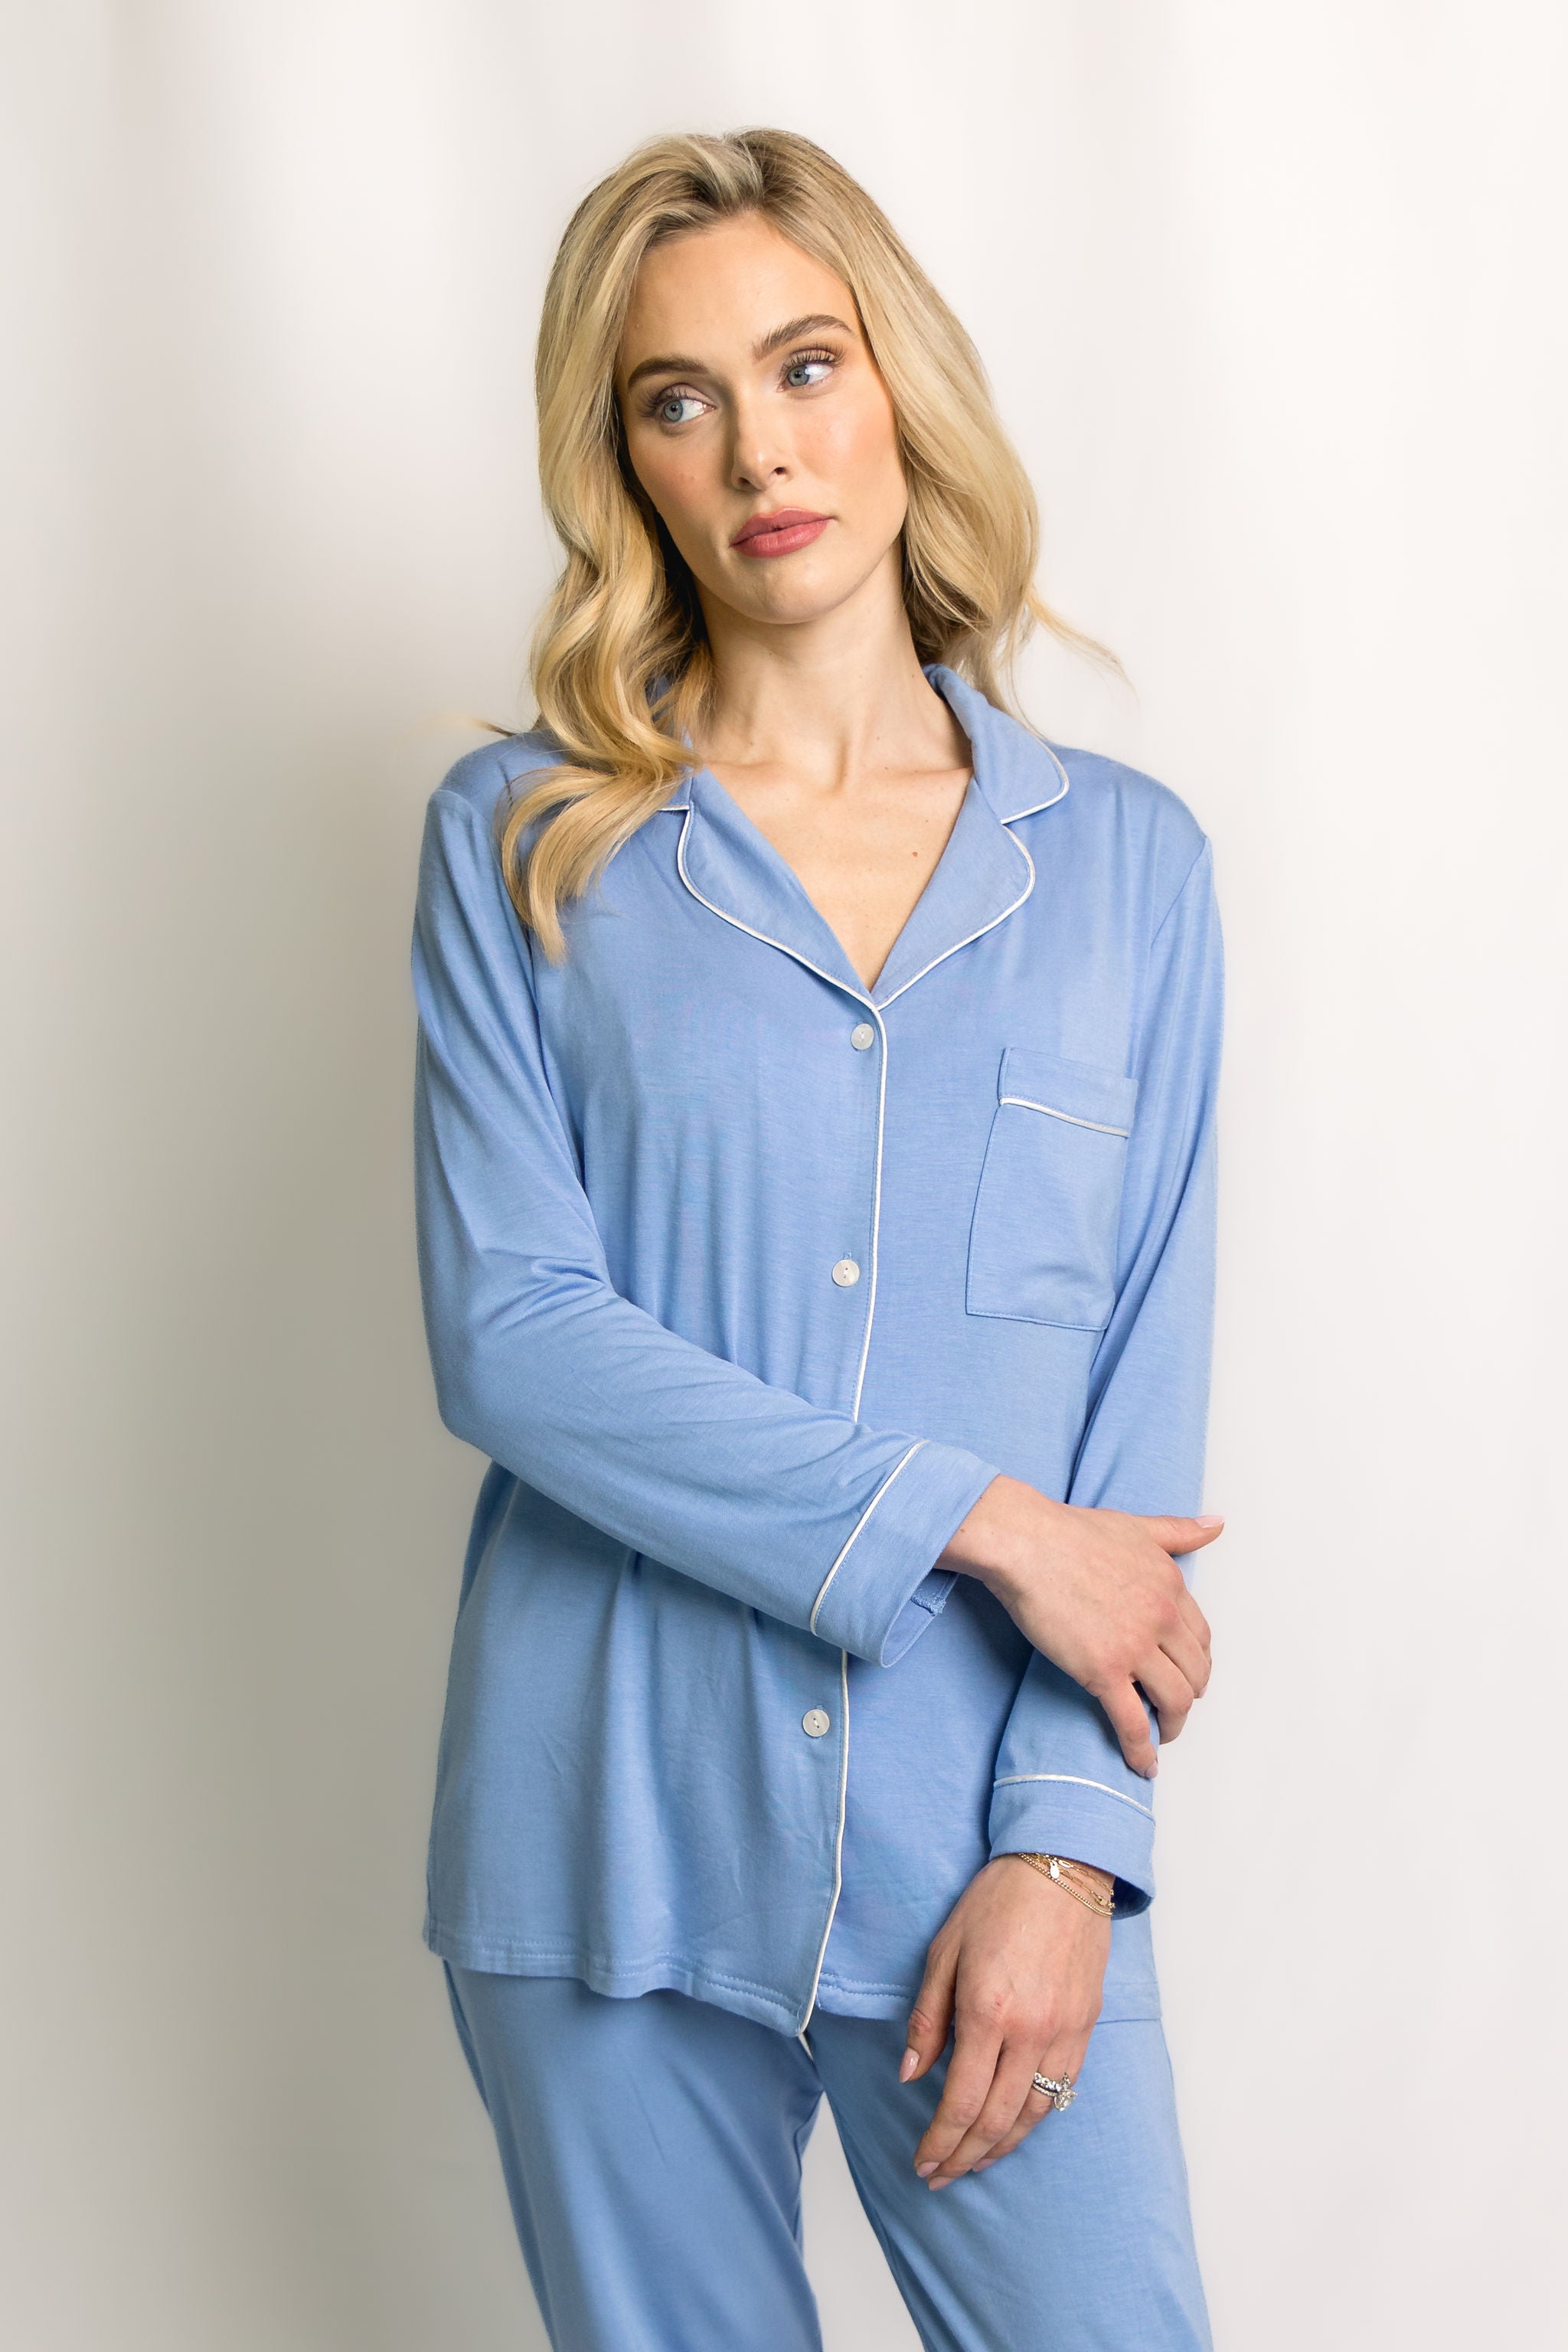 Winter Pajama Set for Women, Long Sleeve Pajama Lightweight Pjs Set Soft  Sleepwear Free Size (28 Till 34) Sky Blue